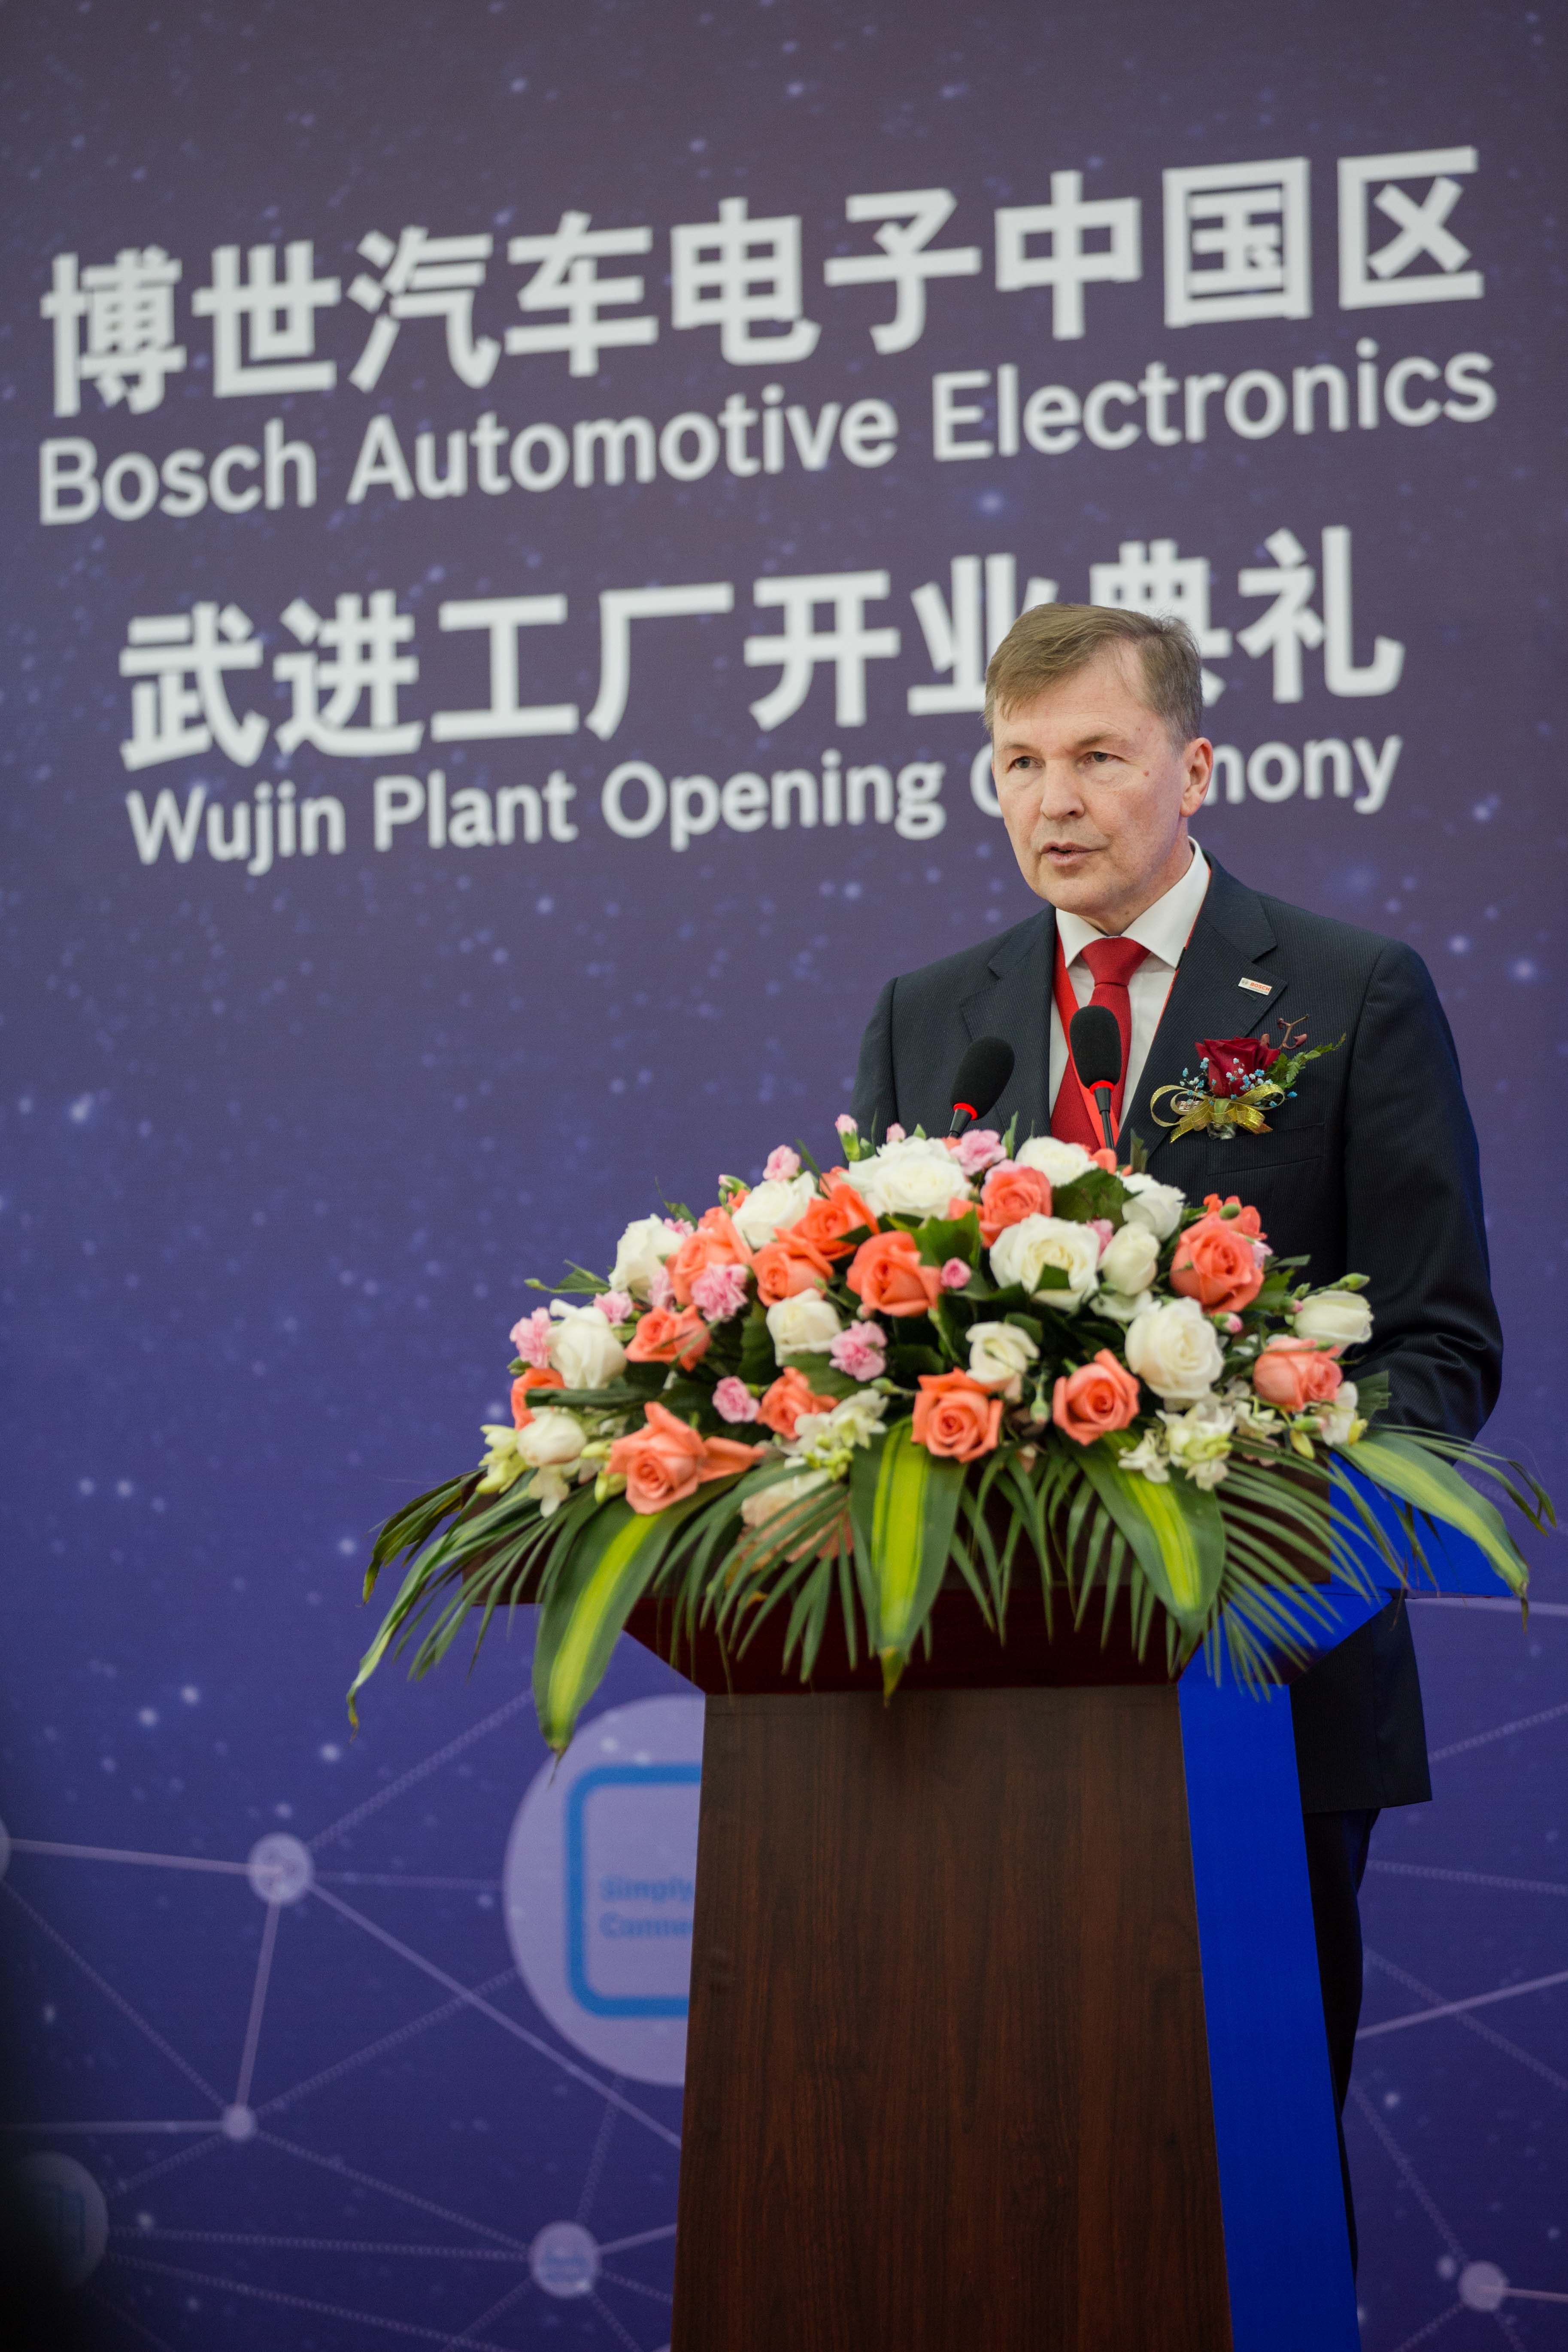 Klaus Meder, president of Bosch Automotive Electronics